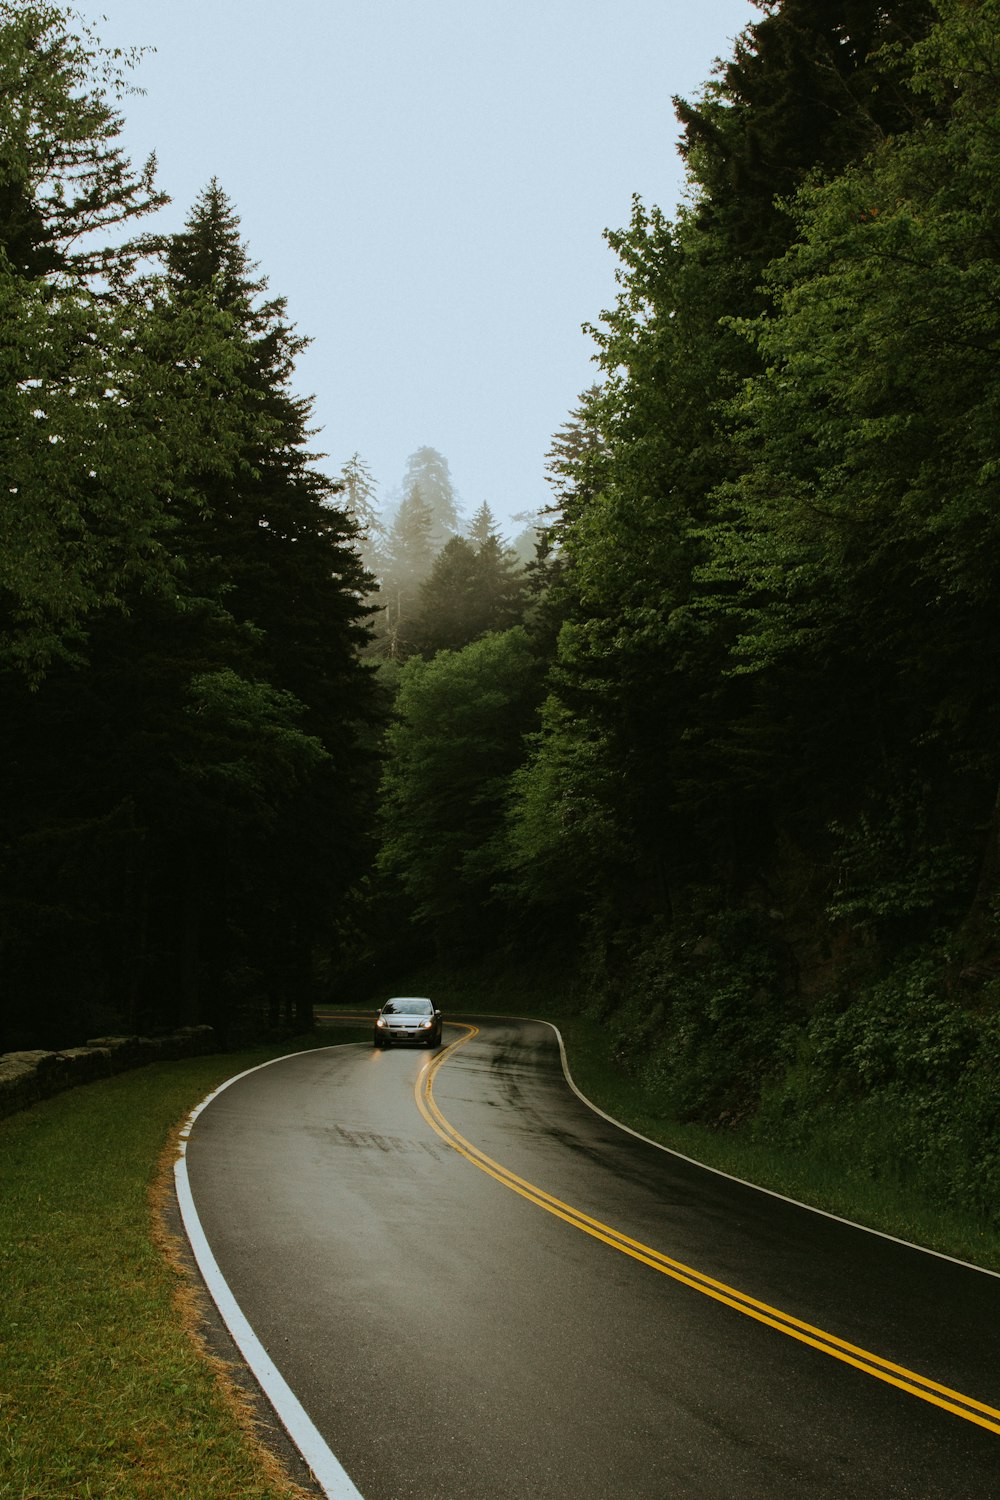 car passing through road between trees